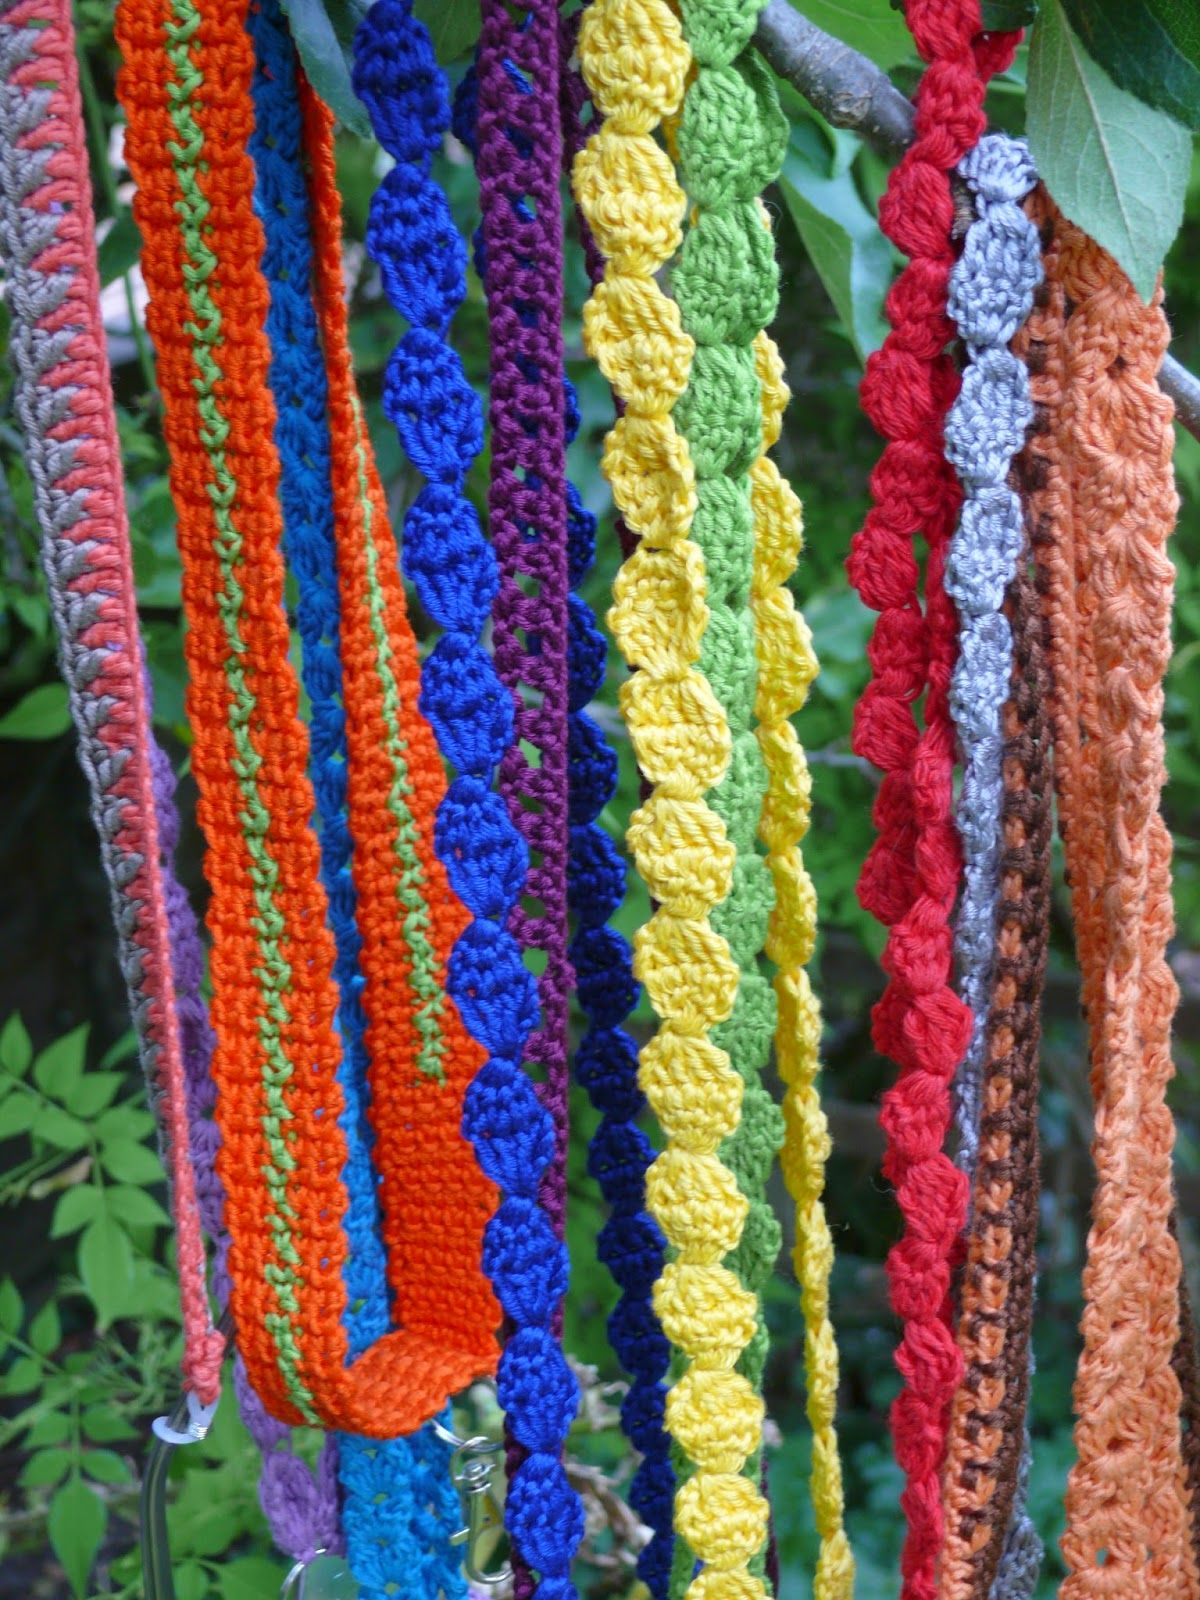 Lanyard Crochet Pattern Crochet Lanyards Crochet Pinterest Crochet Lanyard Crochet